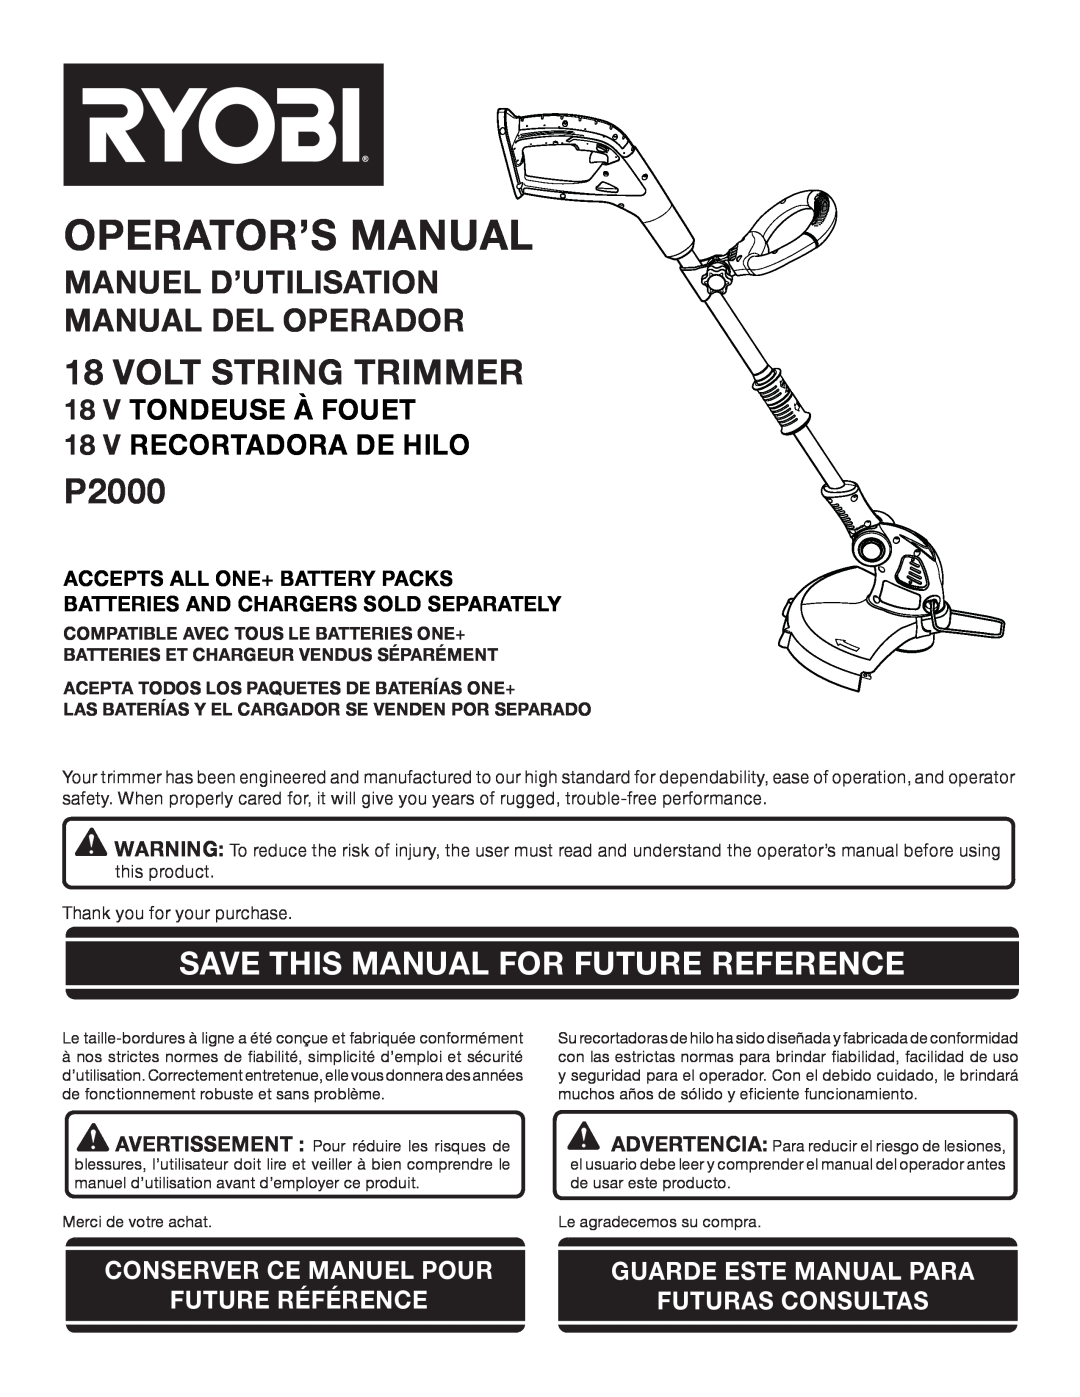 Ryobi P2000 manuel dutilisation VOLT String Trimmer, Manuel D’Utilisation Manual Del Operador, Operator’S Manual 